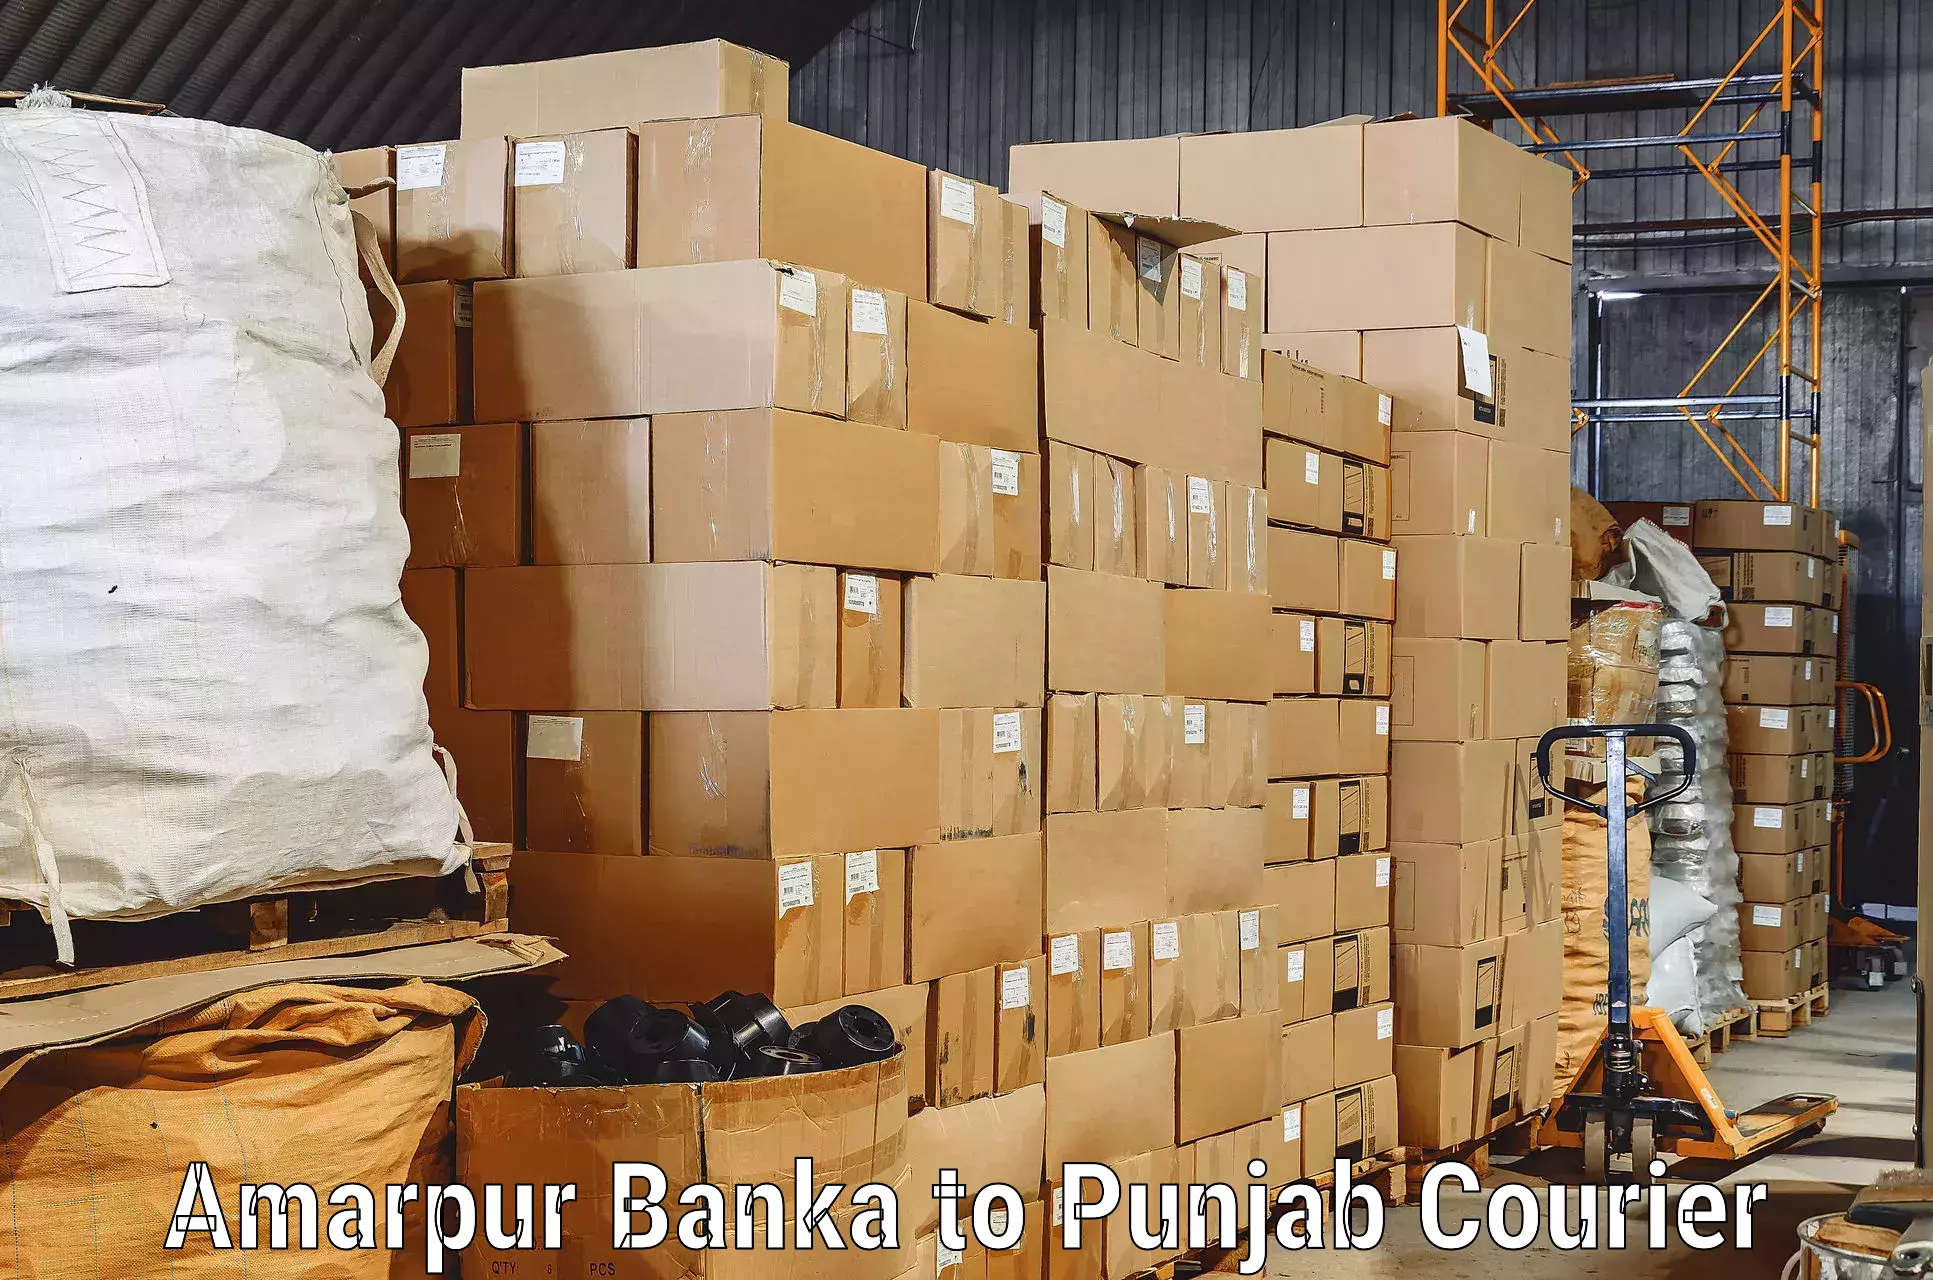 Professional moving assistance Amarpur Banka to Amritsar